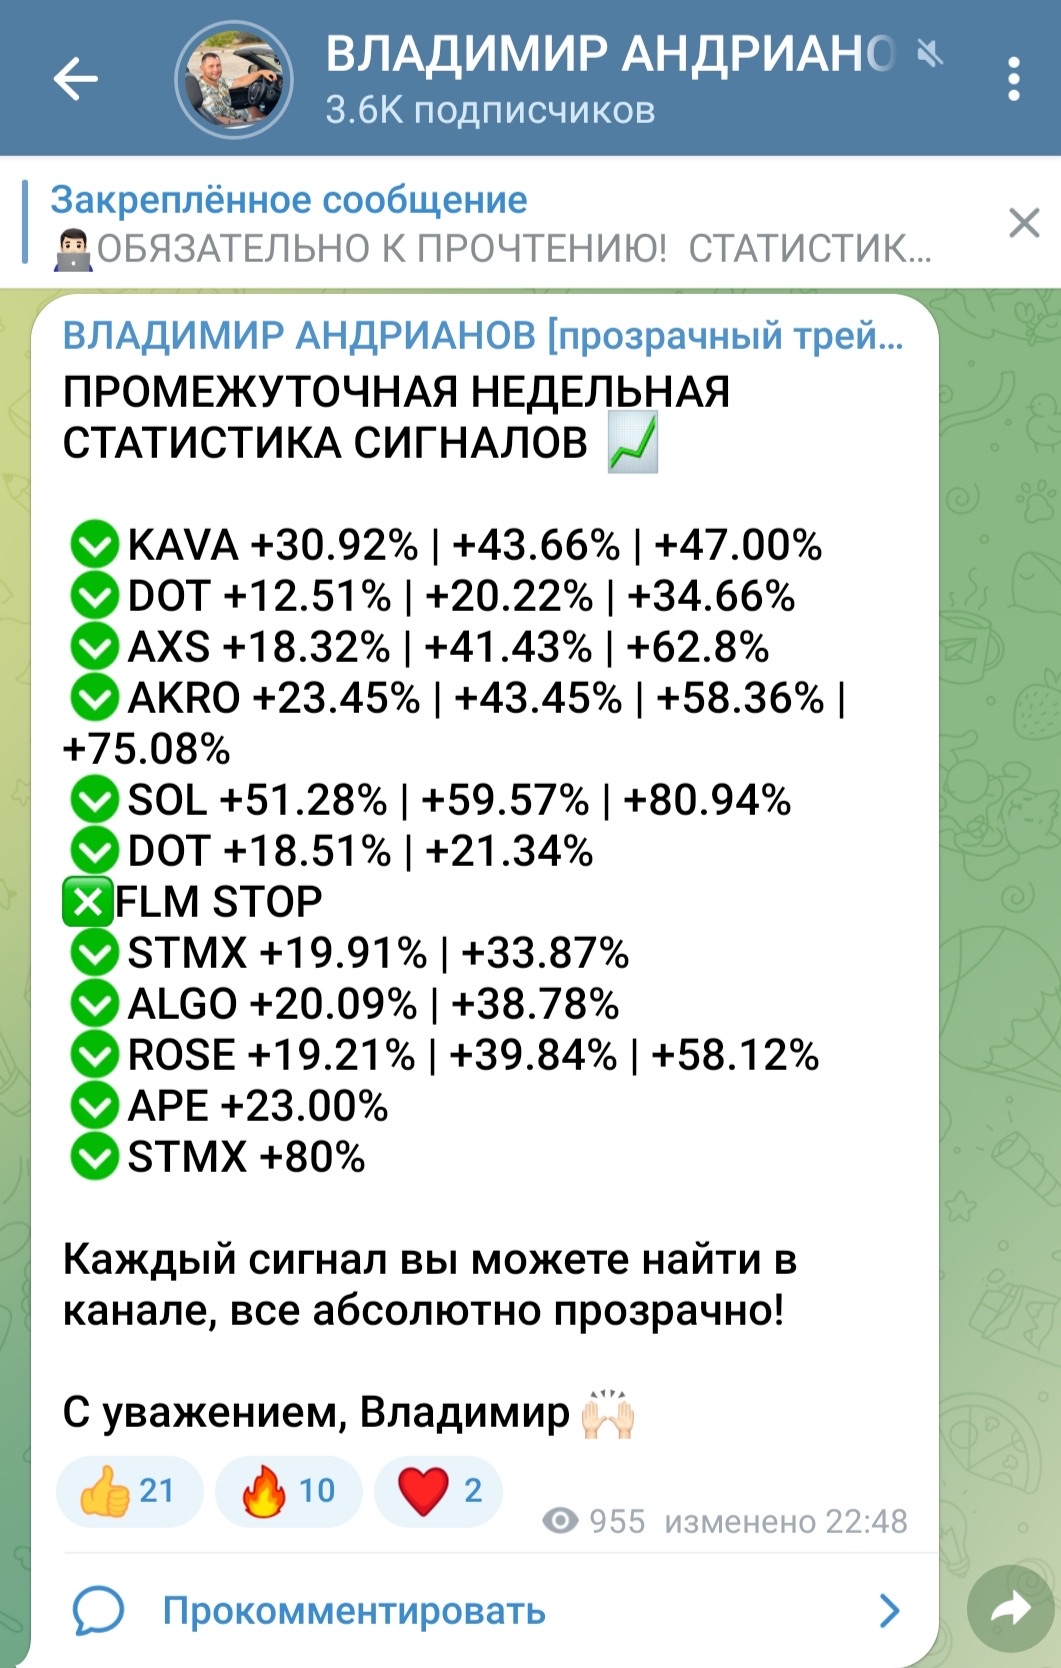 Владимир Андрианов - статистика